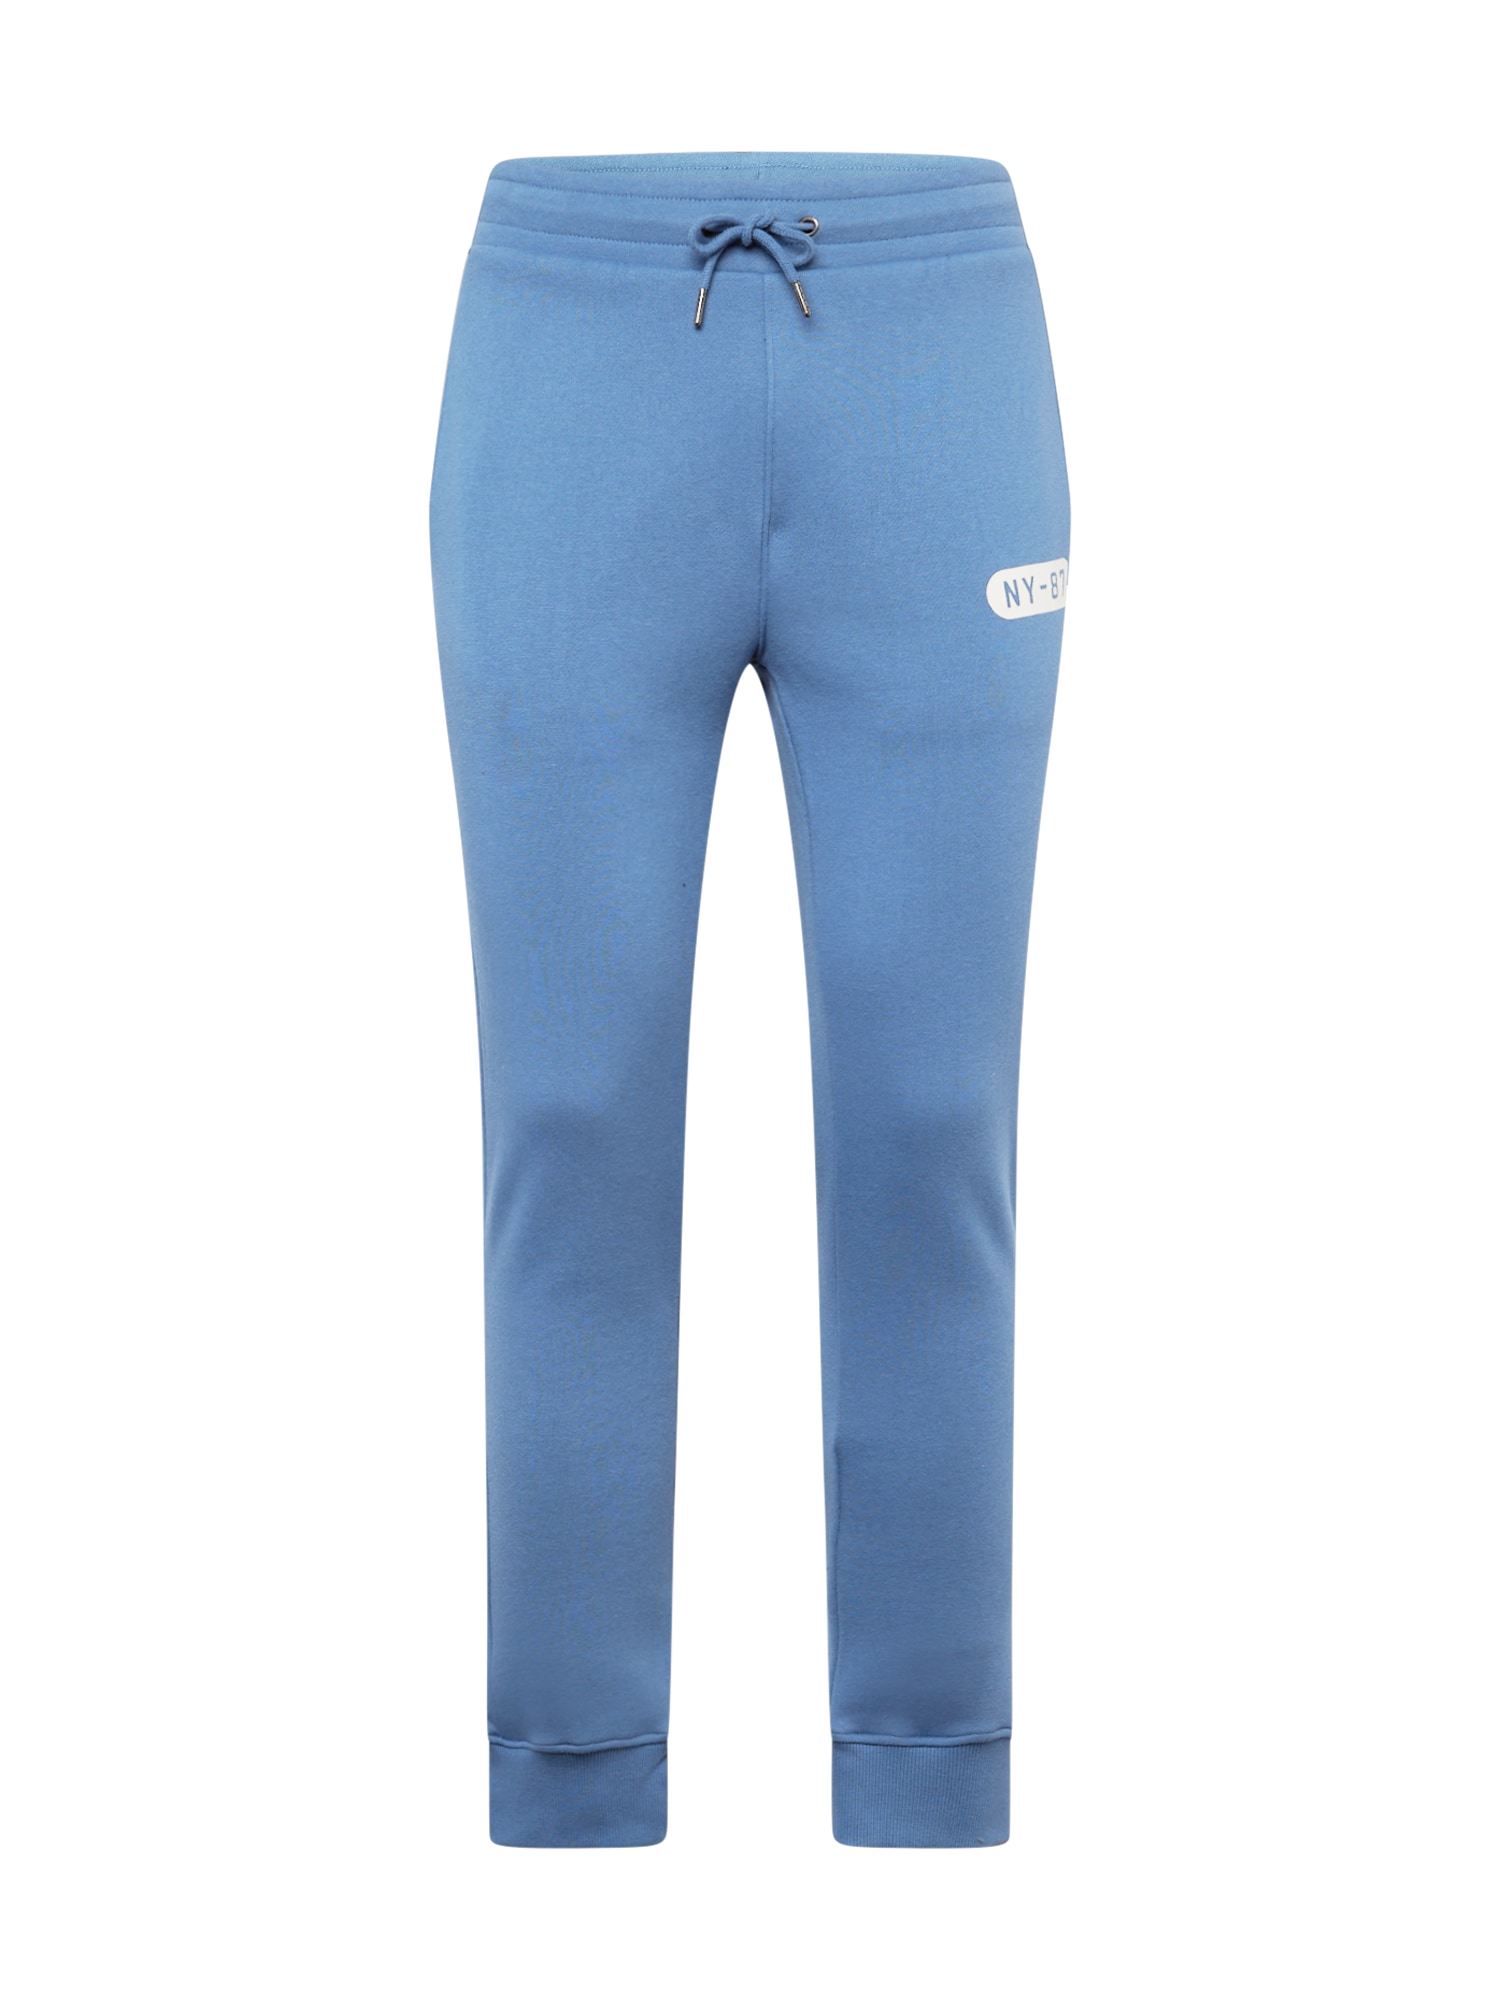 AÉROPOSTALE Športne hlače 'N7-87'  nebeško modra / bela